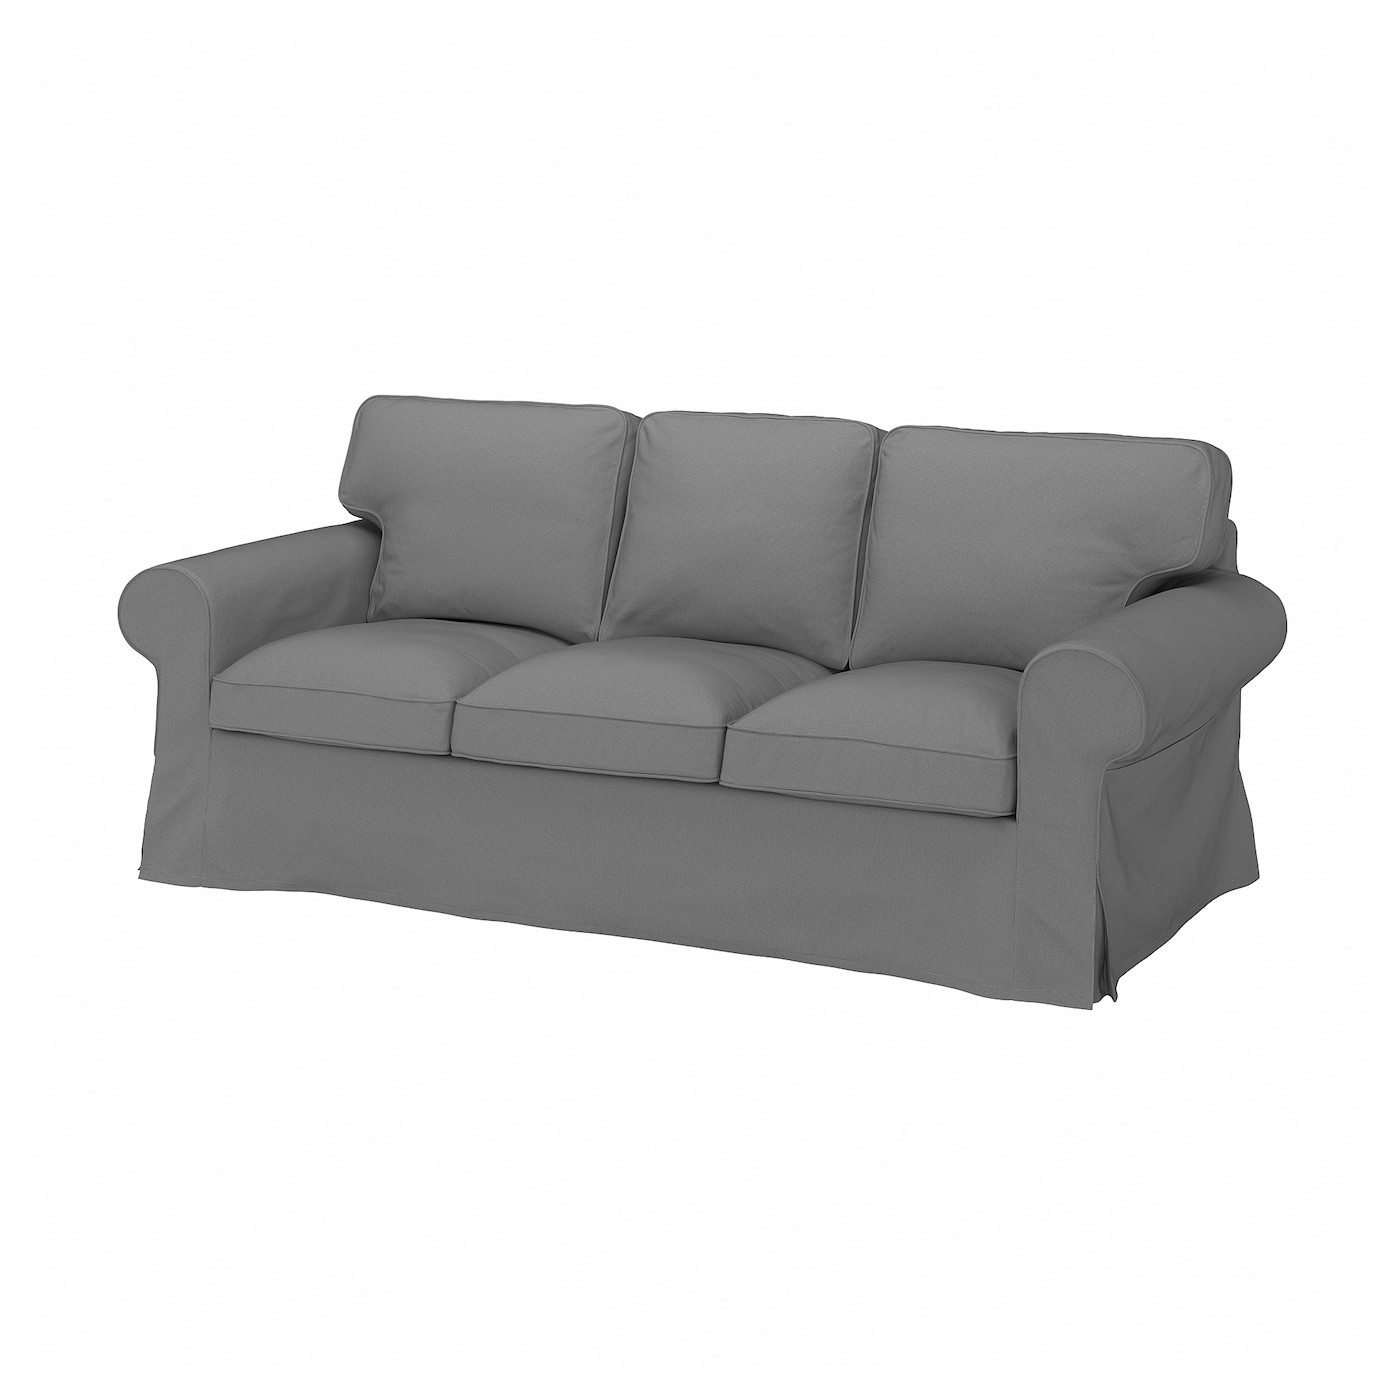 EKTORP Cover for 3-seat sofa